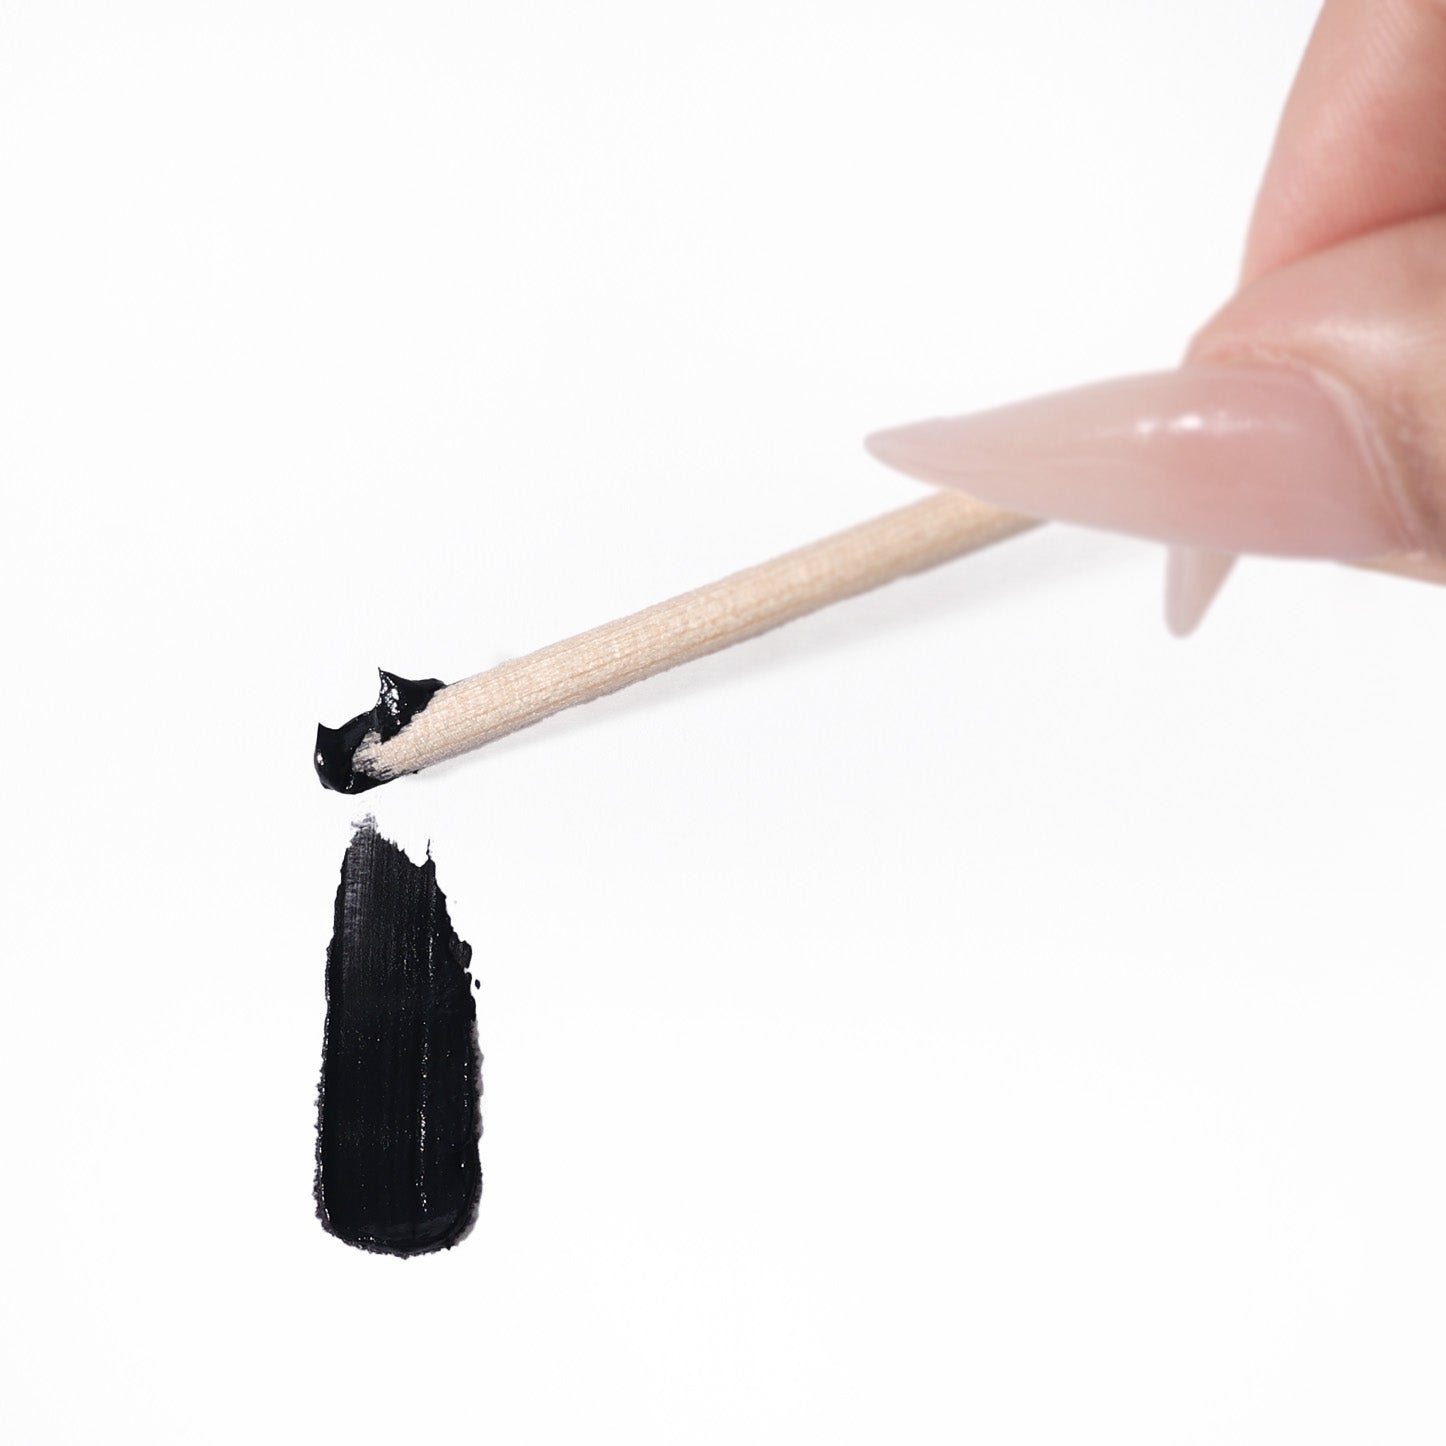 small wooden applicator swiping black tint